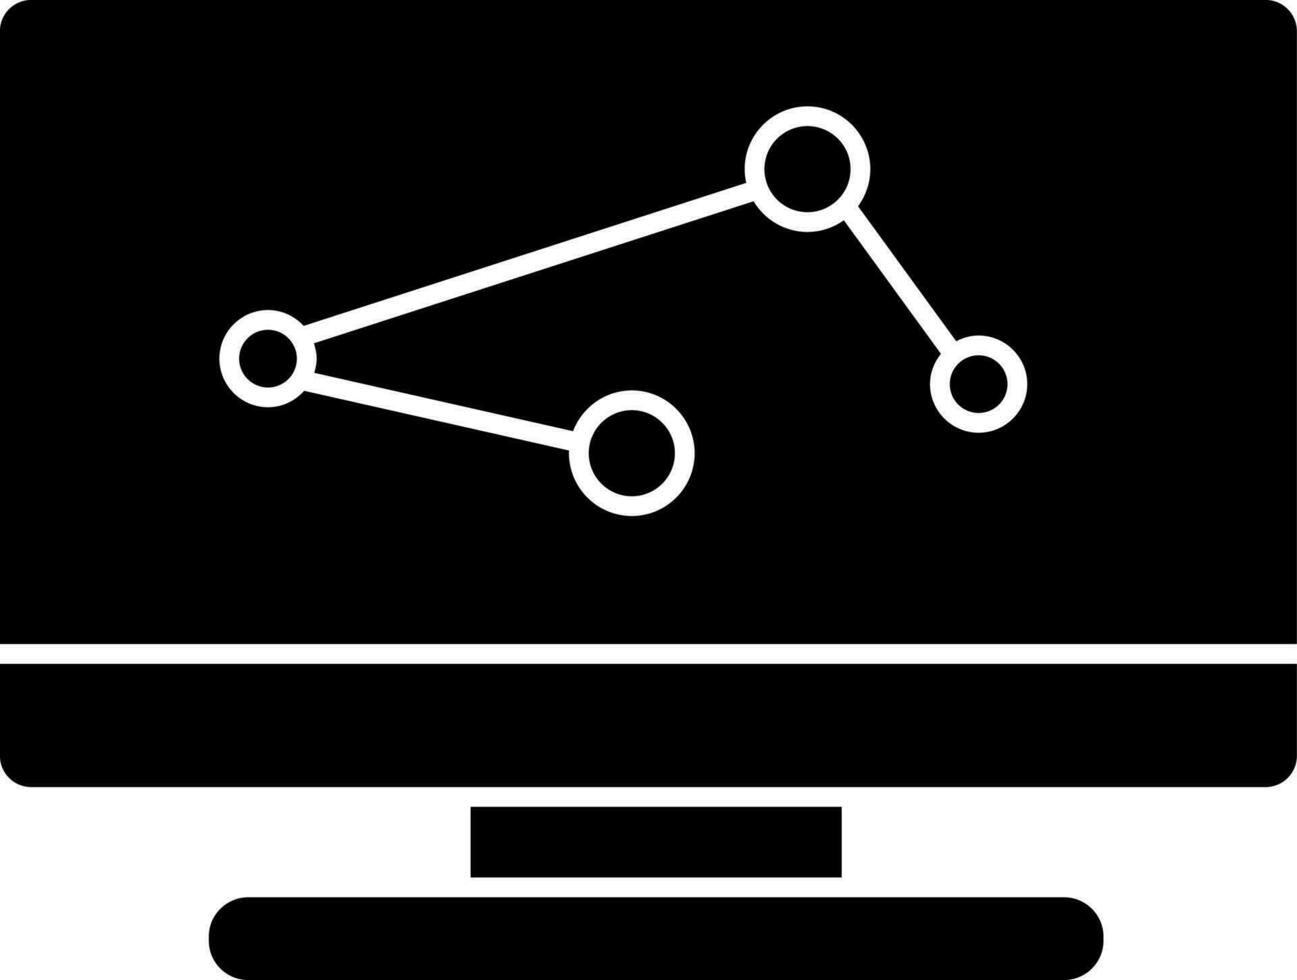 Preto e branco conectados analítico gráfico ícone ou símbolo. vetor